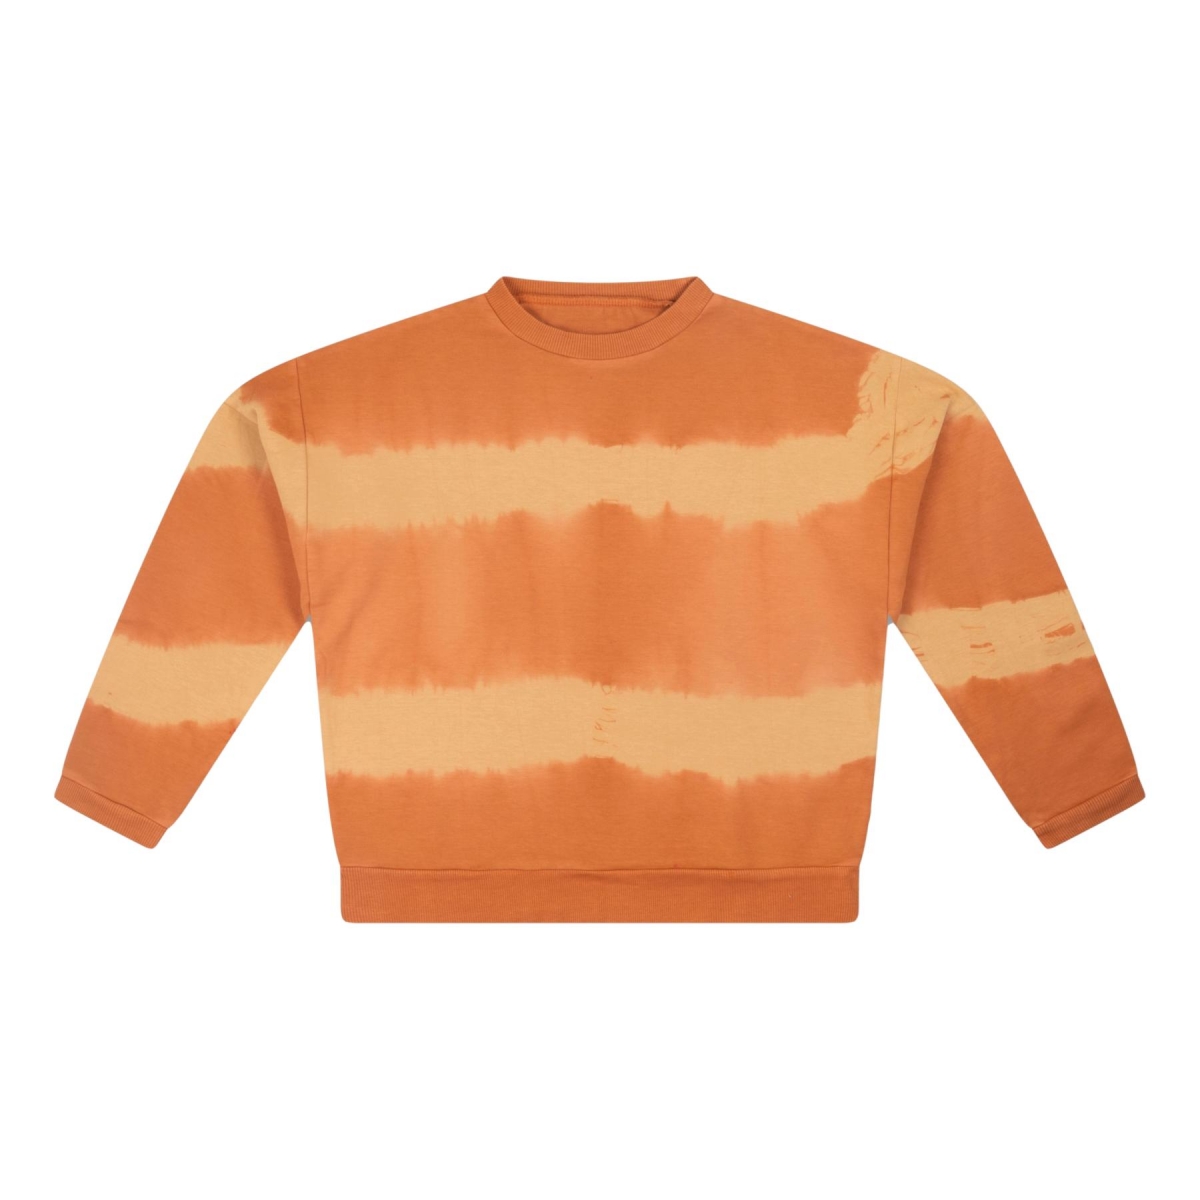 Repose AMS Sweater Fudge marble Brown Q1Q2 21-20 